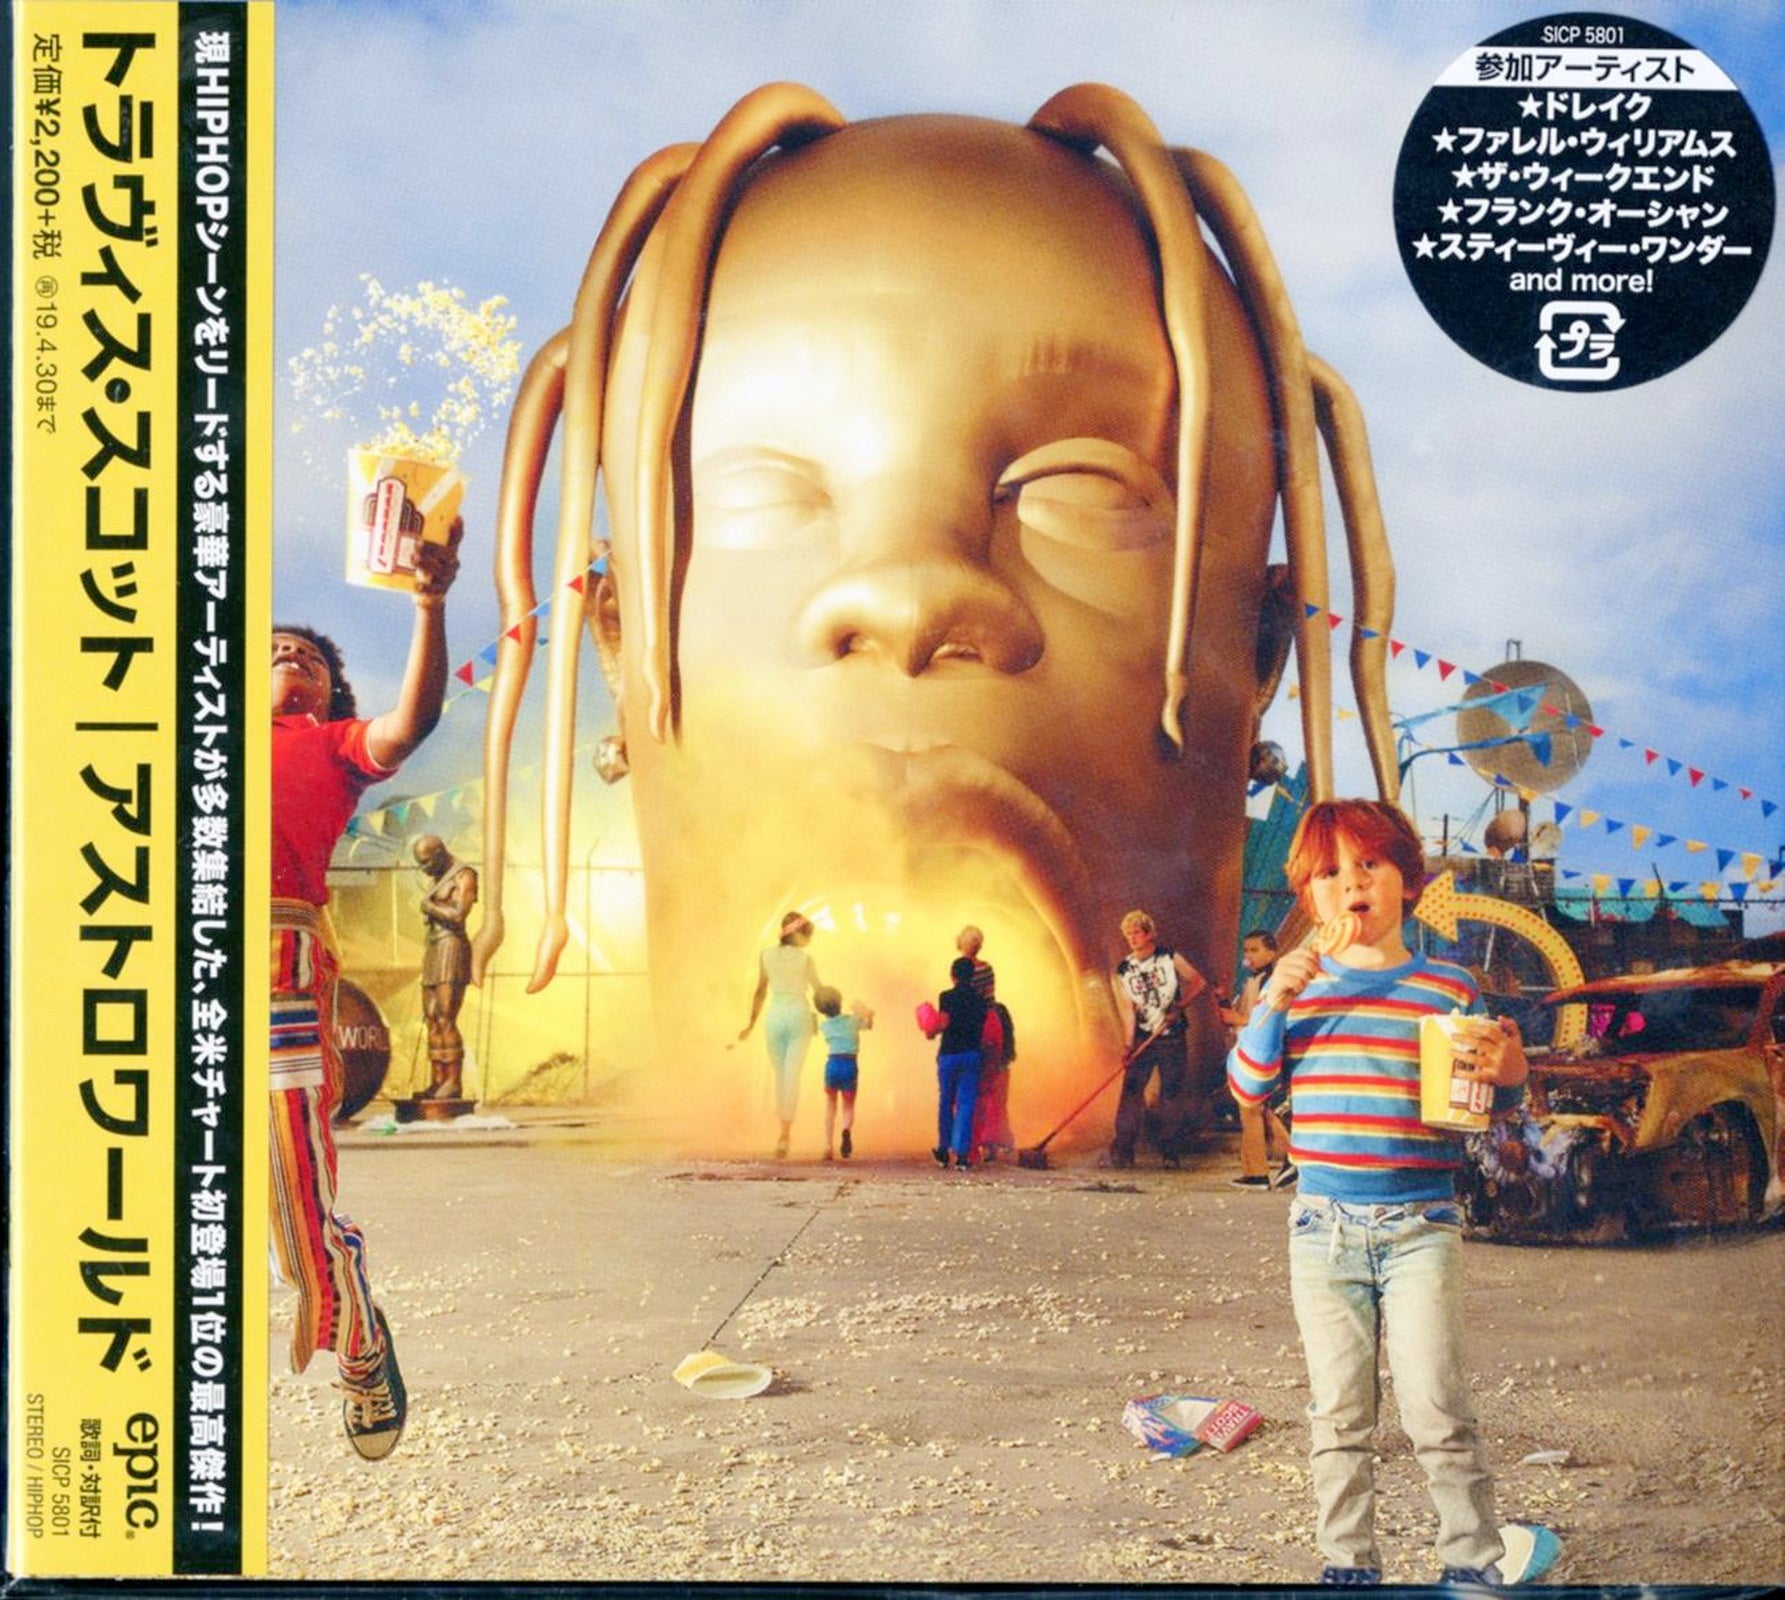 Travi$ Scott - Astroworld - Japanese CD